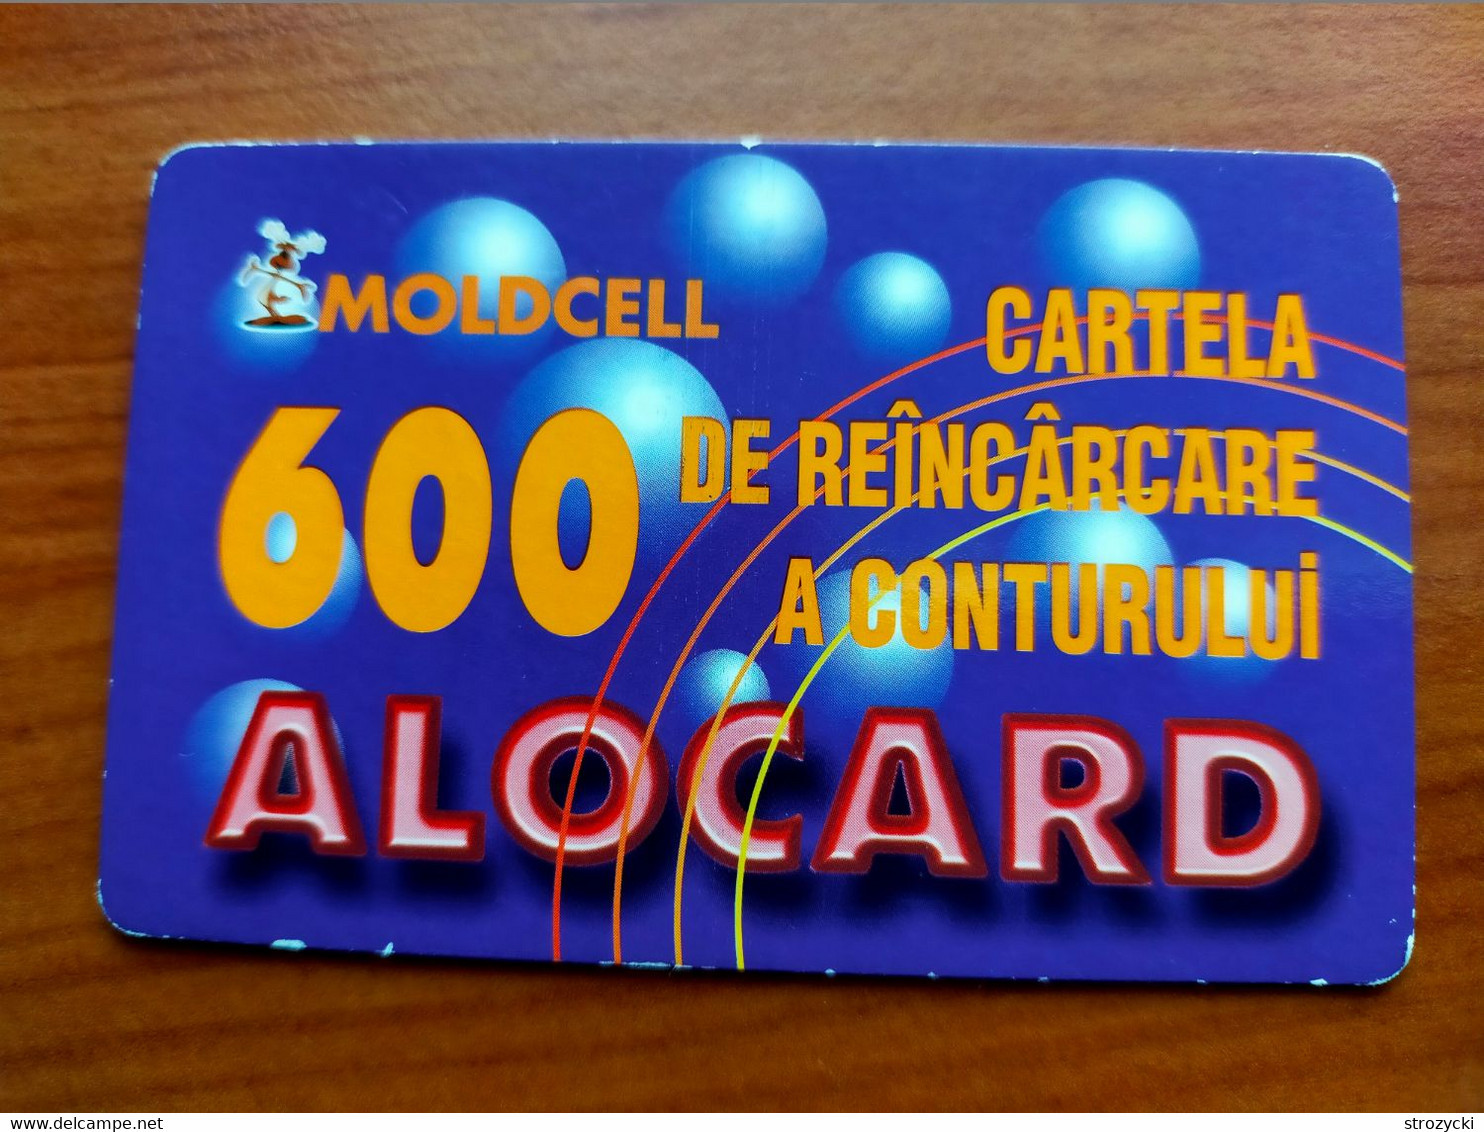 Moldova - Moldcell Lilac Balls 600 Lei - Moldova